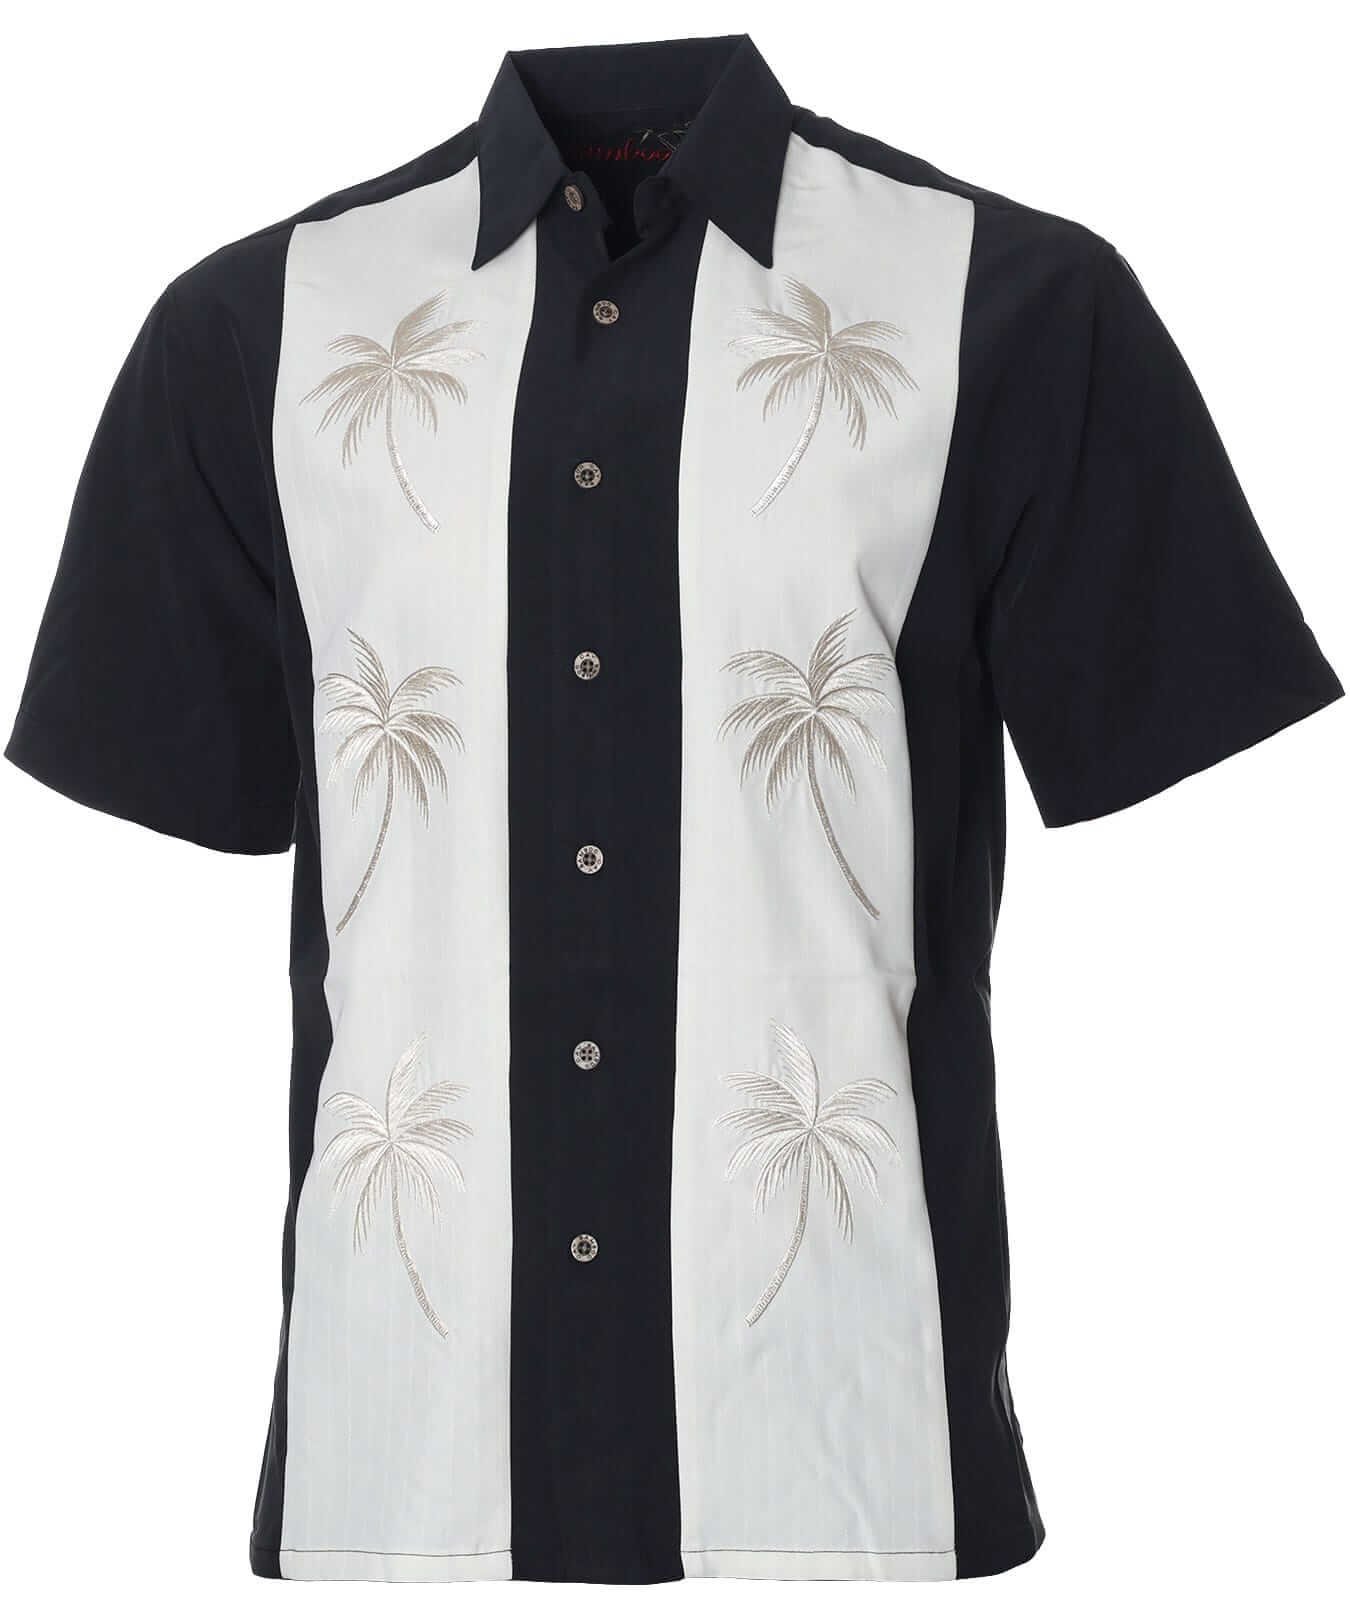 Elegant Shirt Bamboo Cay Black